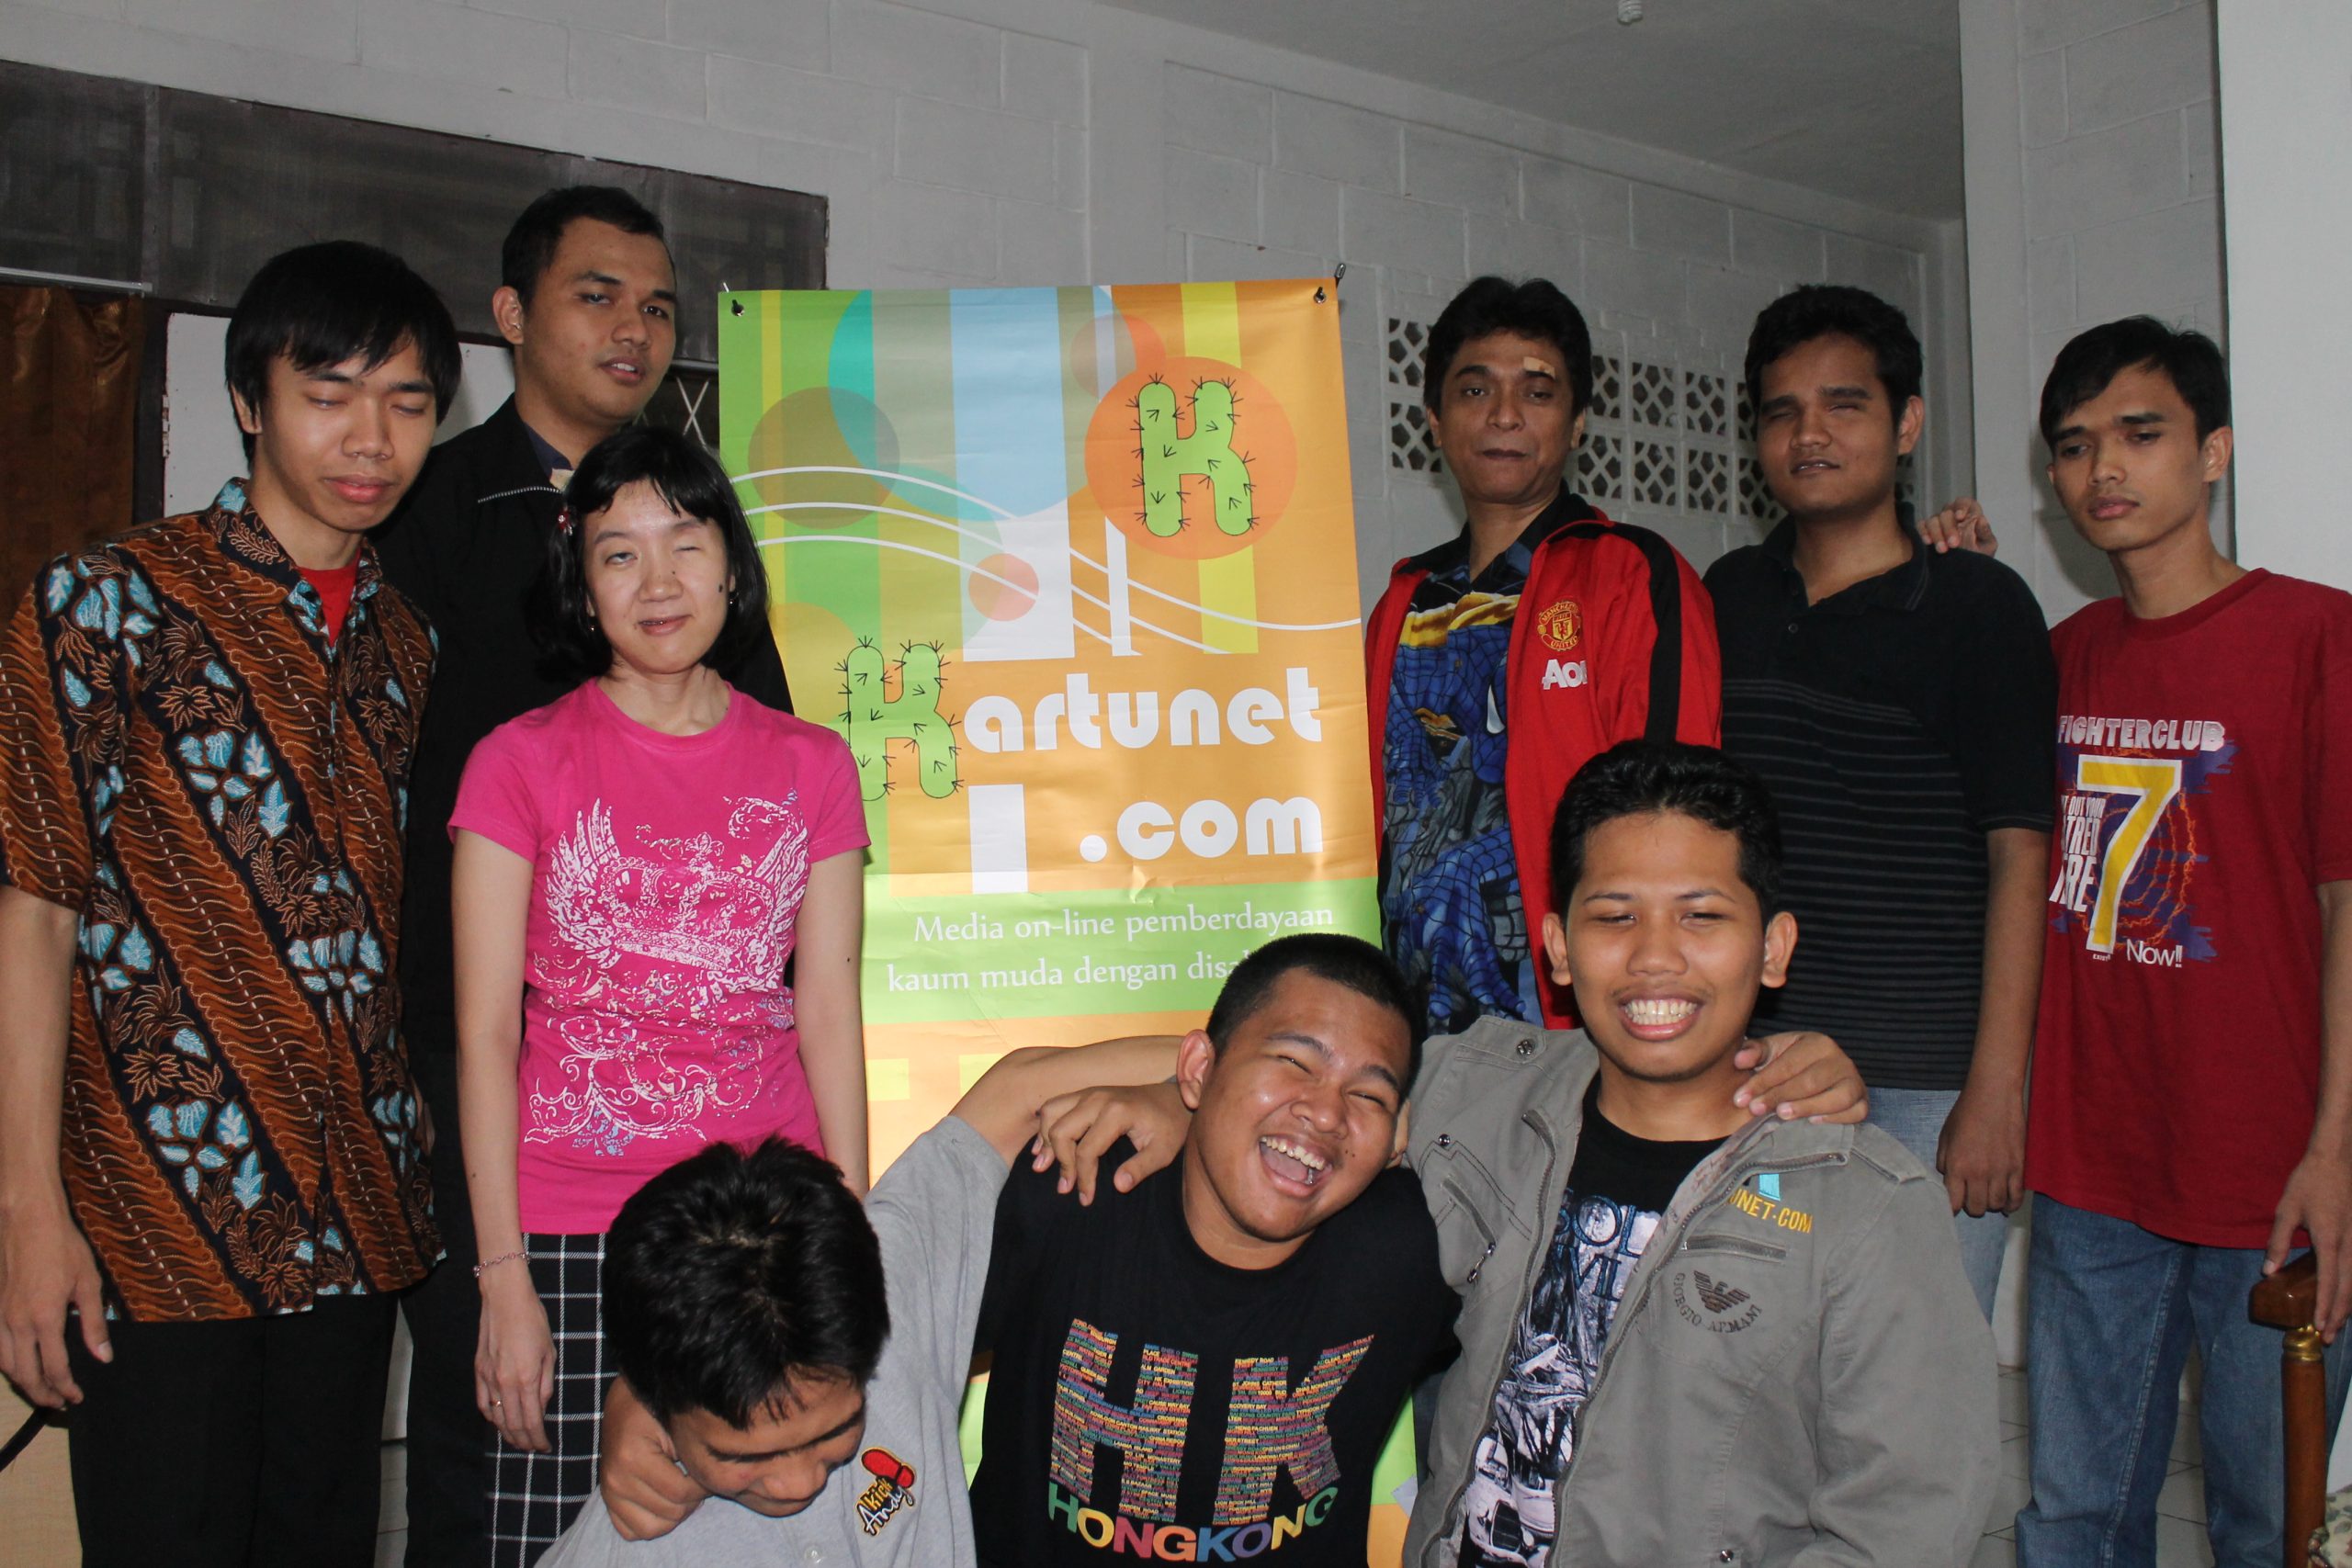 Foto bersama para co-founder Kartunet: Iwa, Aris, Riqo, dan Dimas.